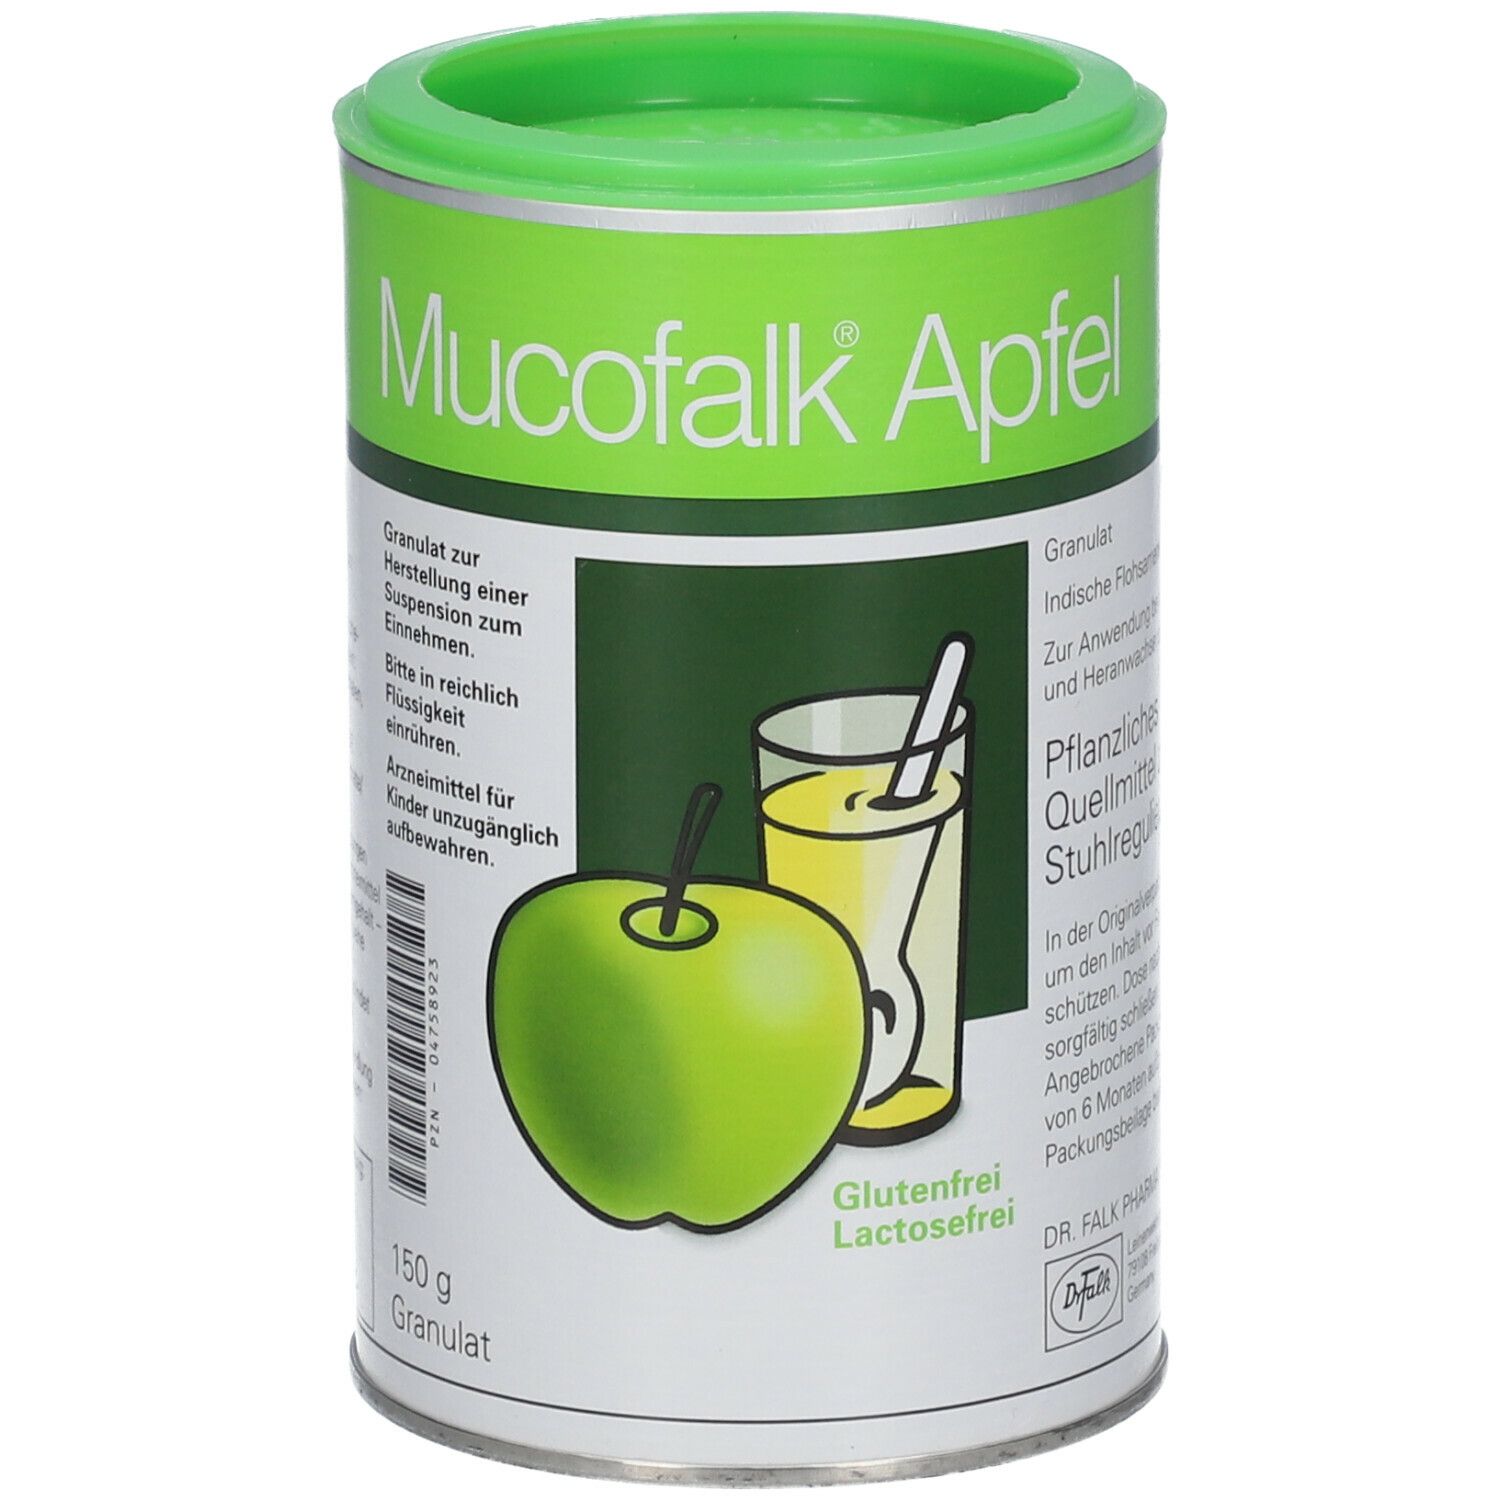 Mucofalk® Apfel Dose Granulat